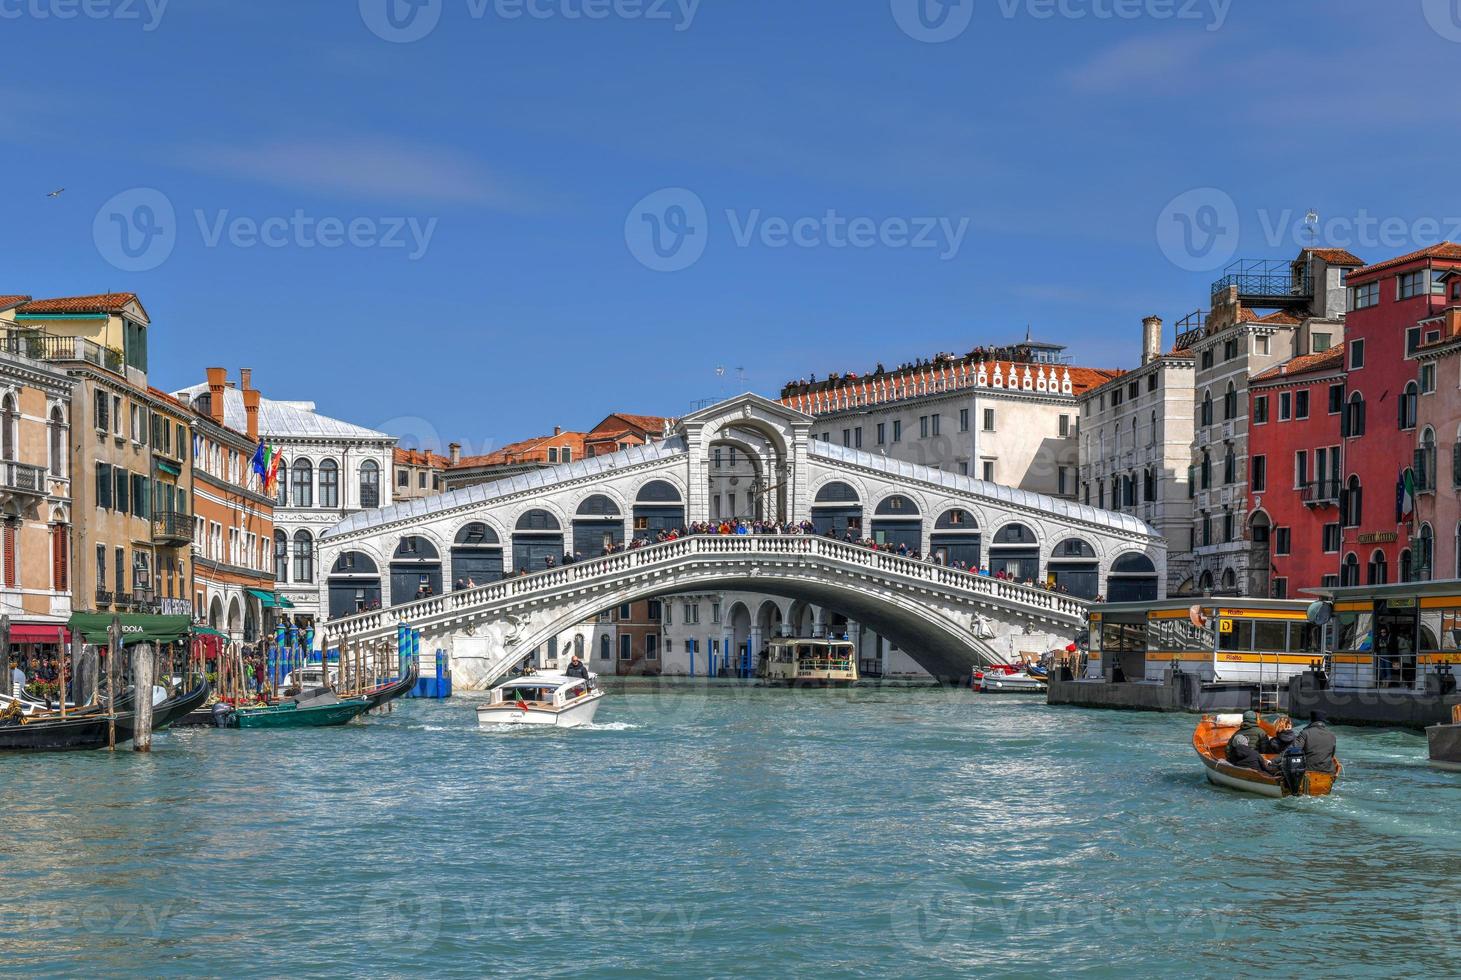 de rialto brug langs de groots kanaal in Venetië, Italië foto